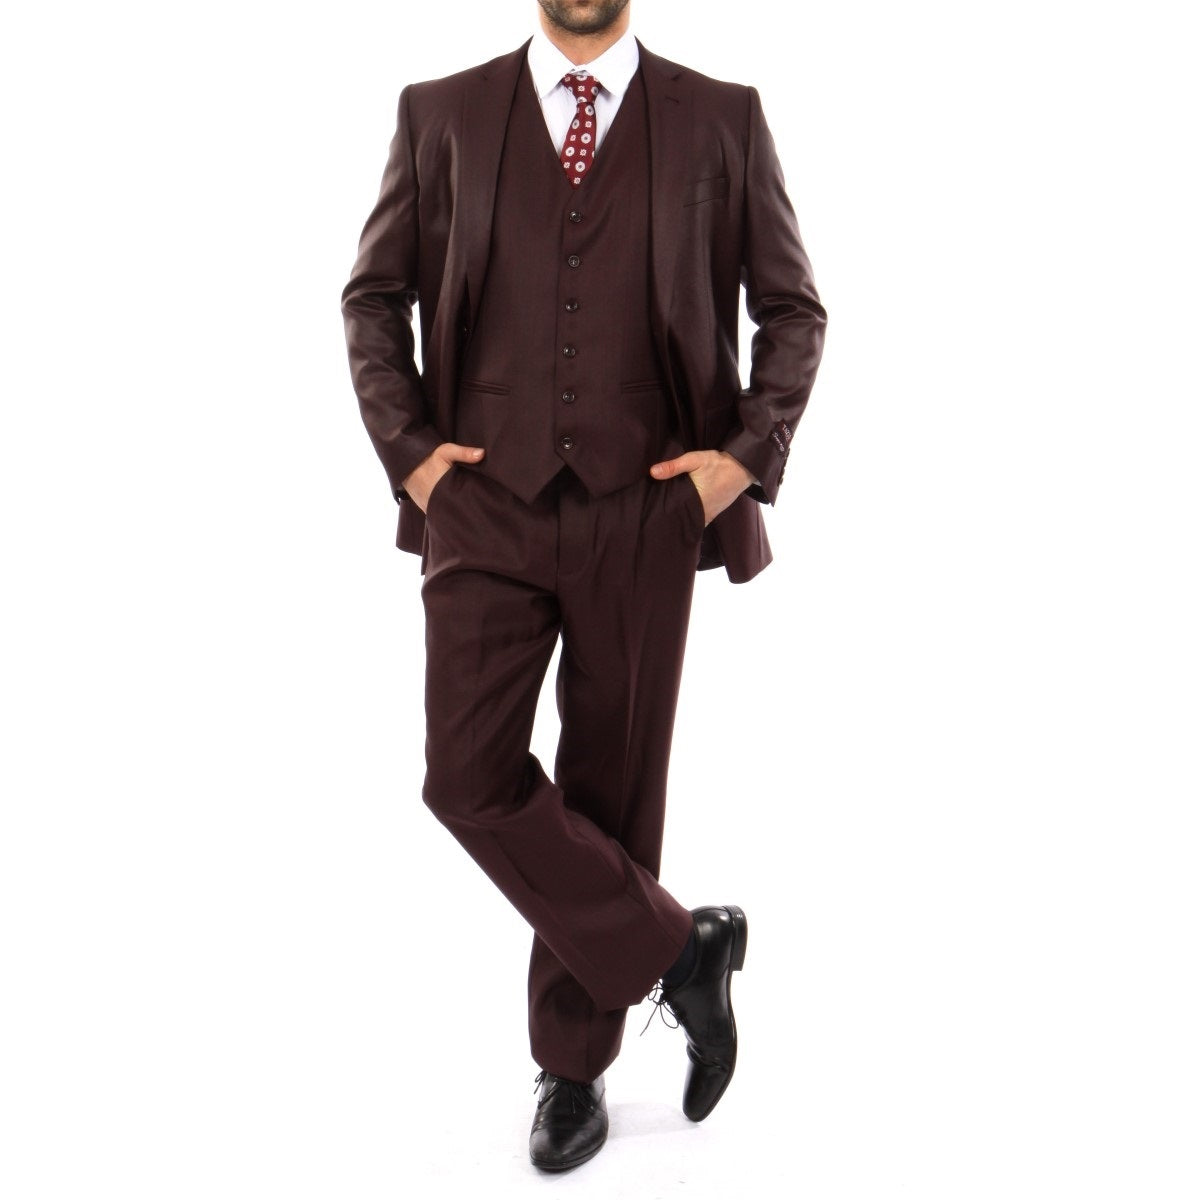 Traje Formal para Hombre TA-M158-12 Burgundy - Formal Suit for Men Open